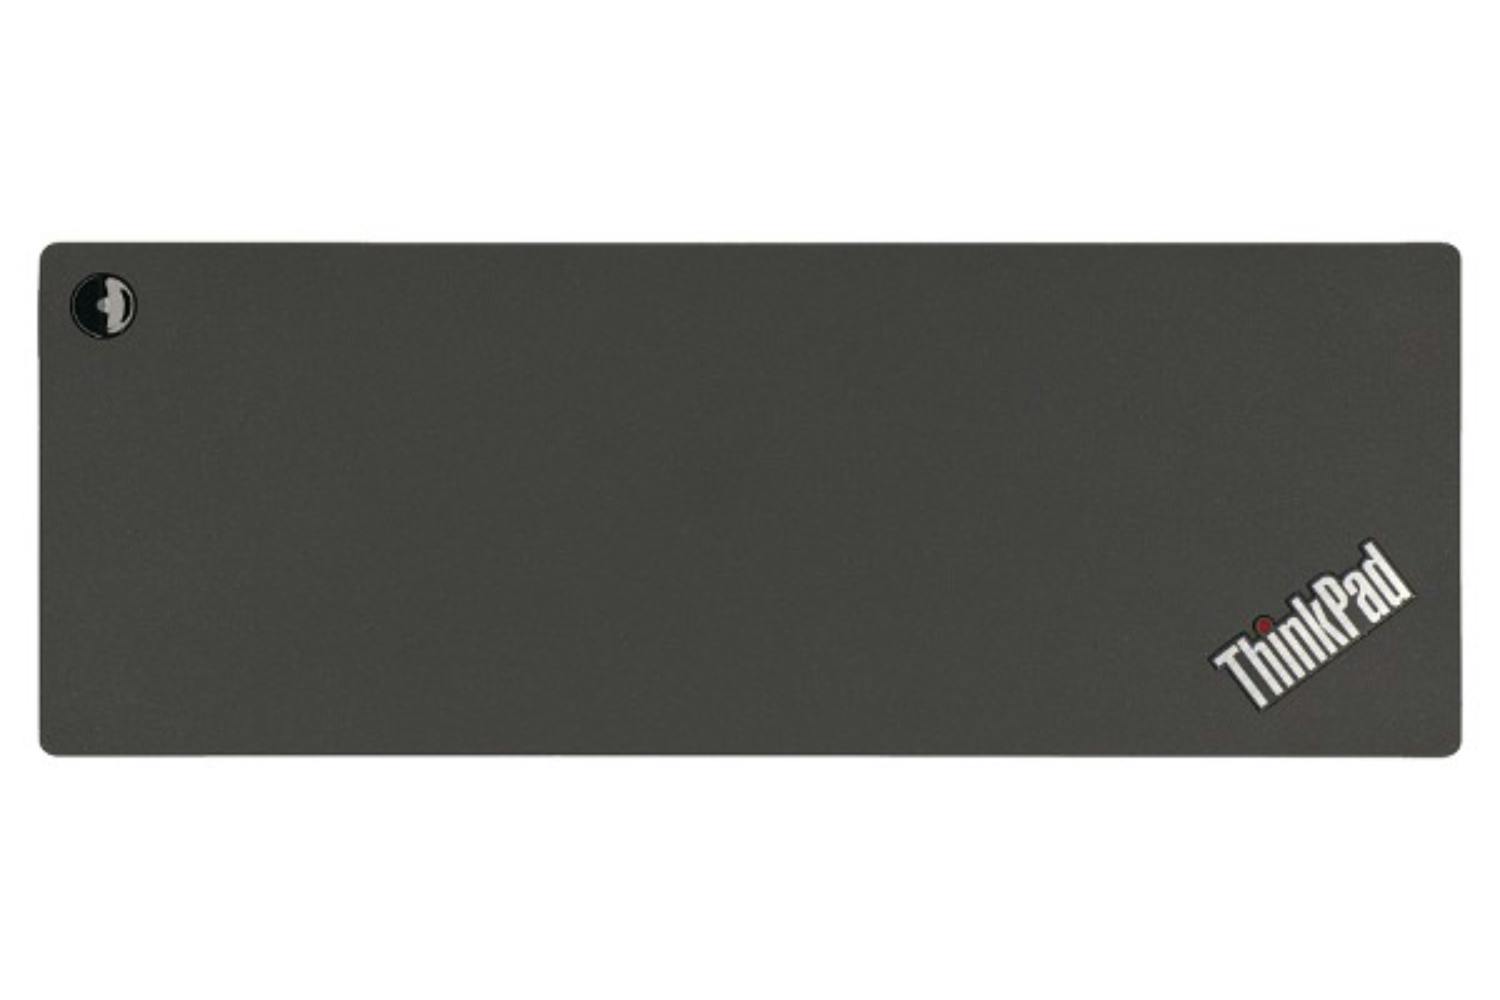 Lenovo 40AN0135IN 135W ThinkPad Thunderbolt 3 Dock